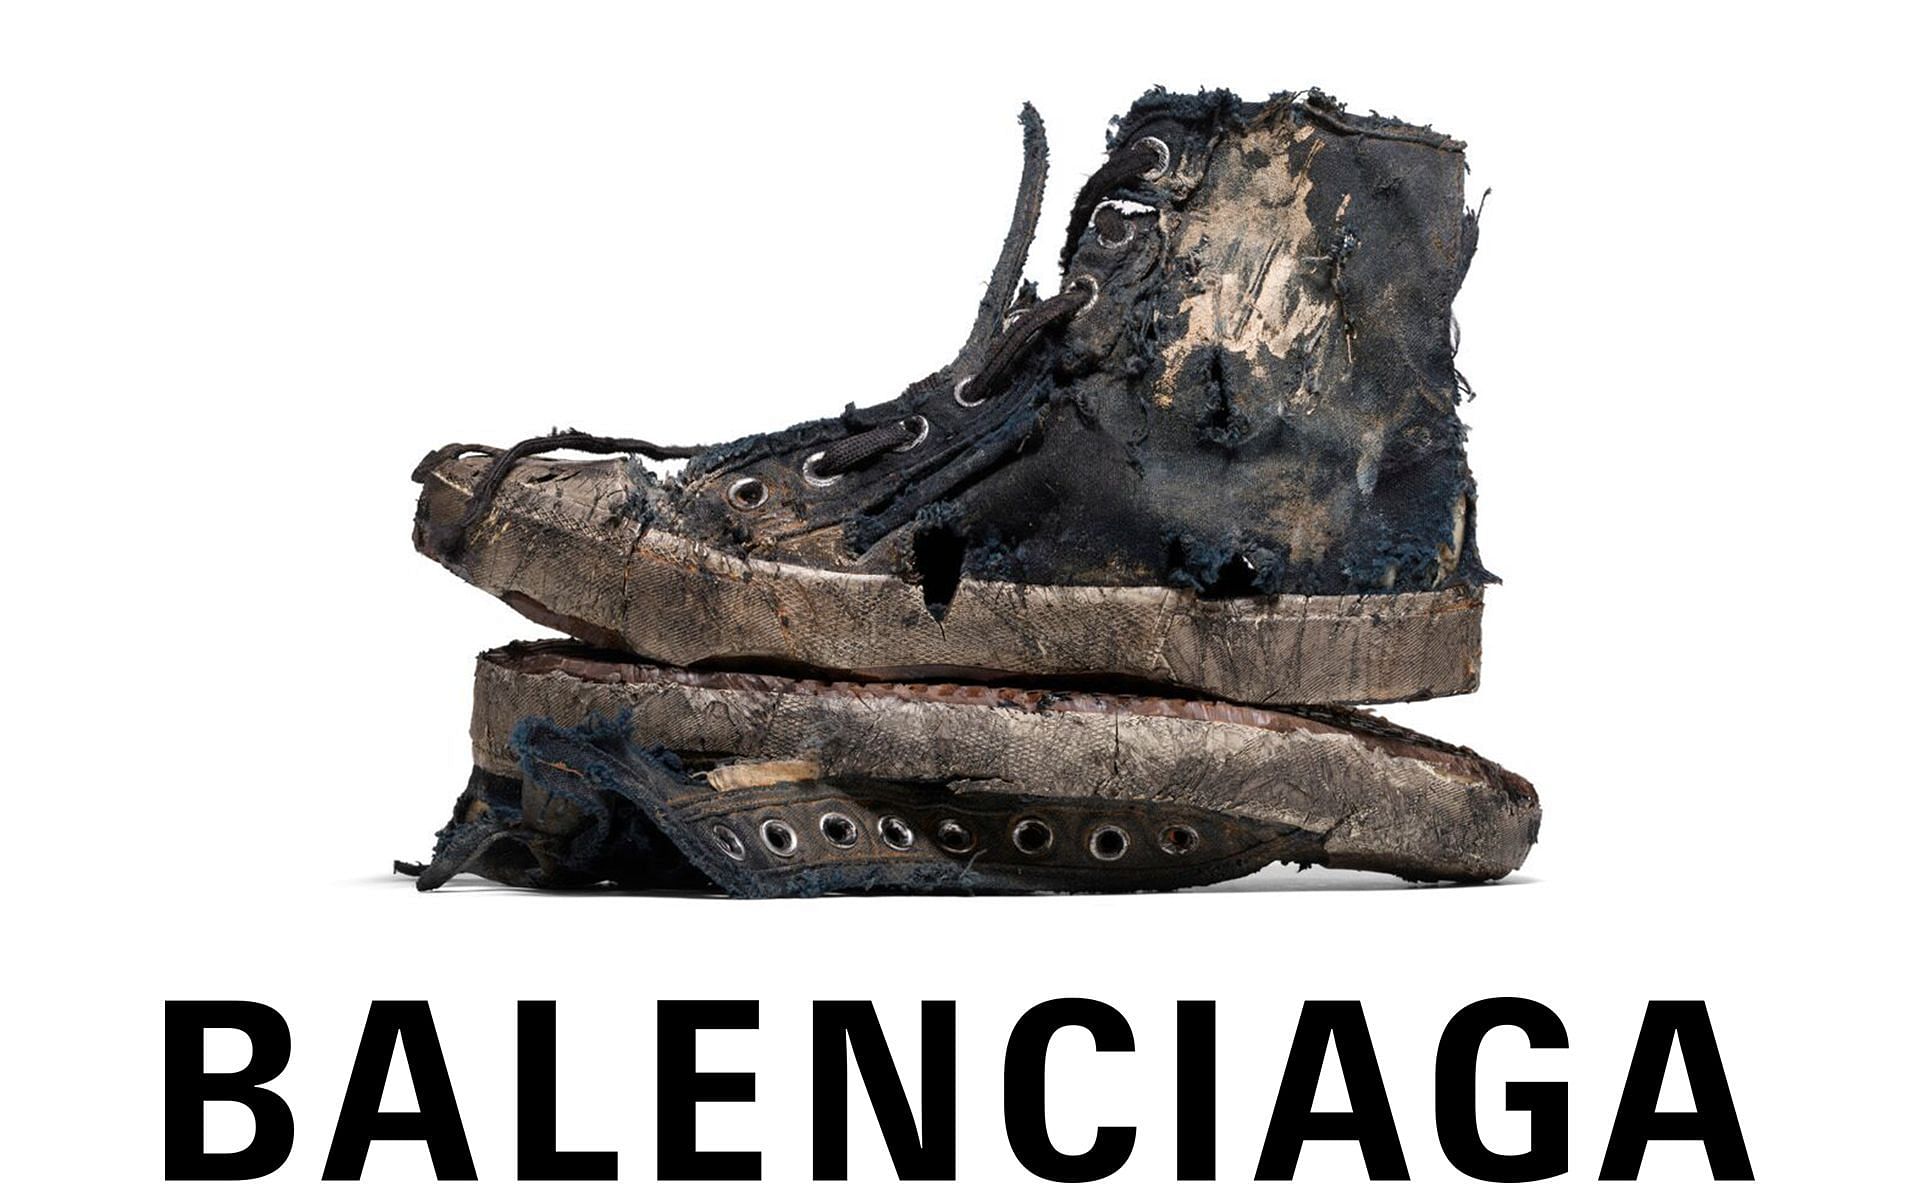 Balenciaga Paris sneakers in full destroyed black colorway (Image via Balenciaga)